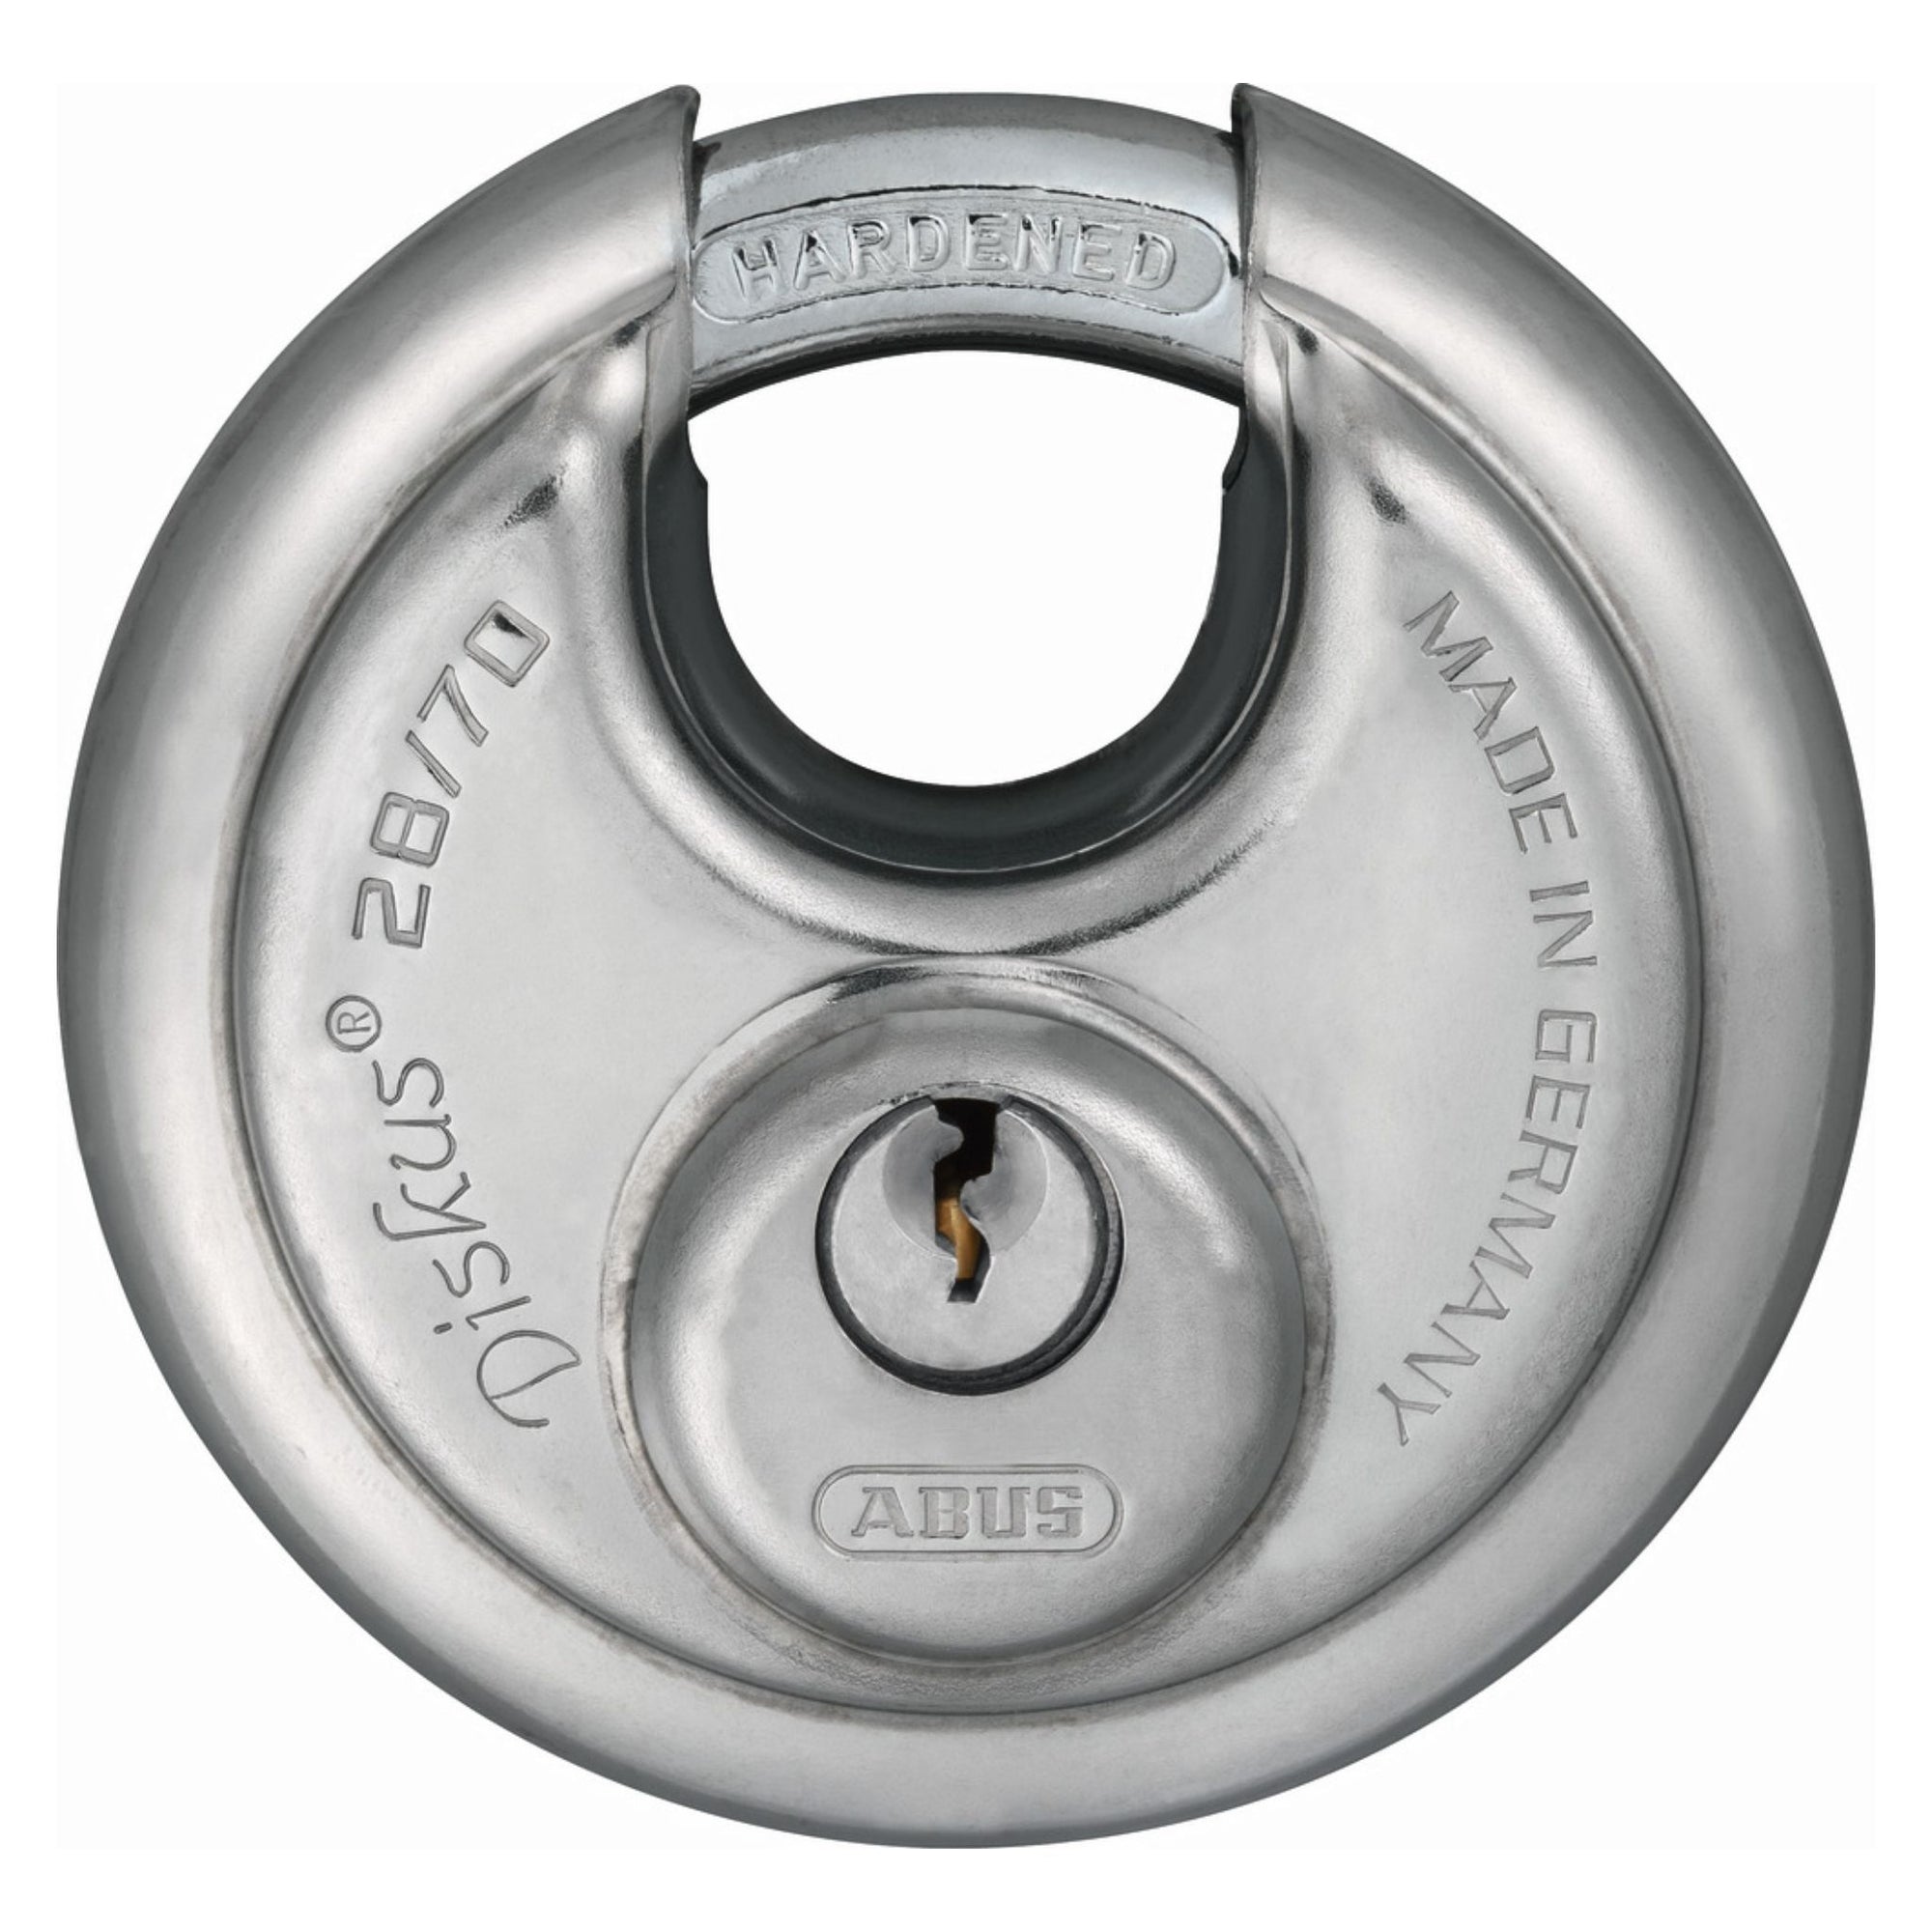 Abus 28/70 Diskus Series Locks Hardened Steel Disk Padlocks - The Lock Source